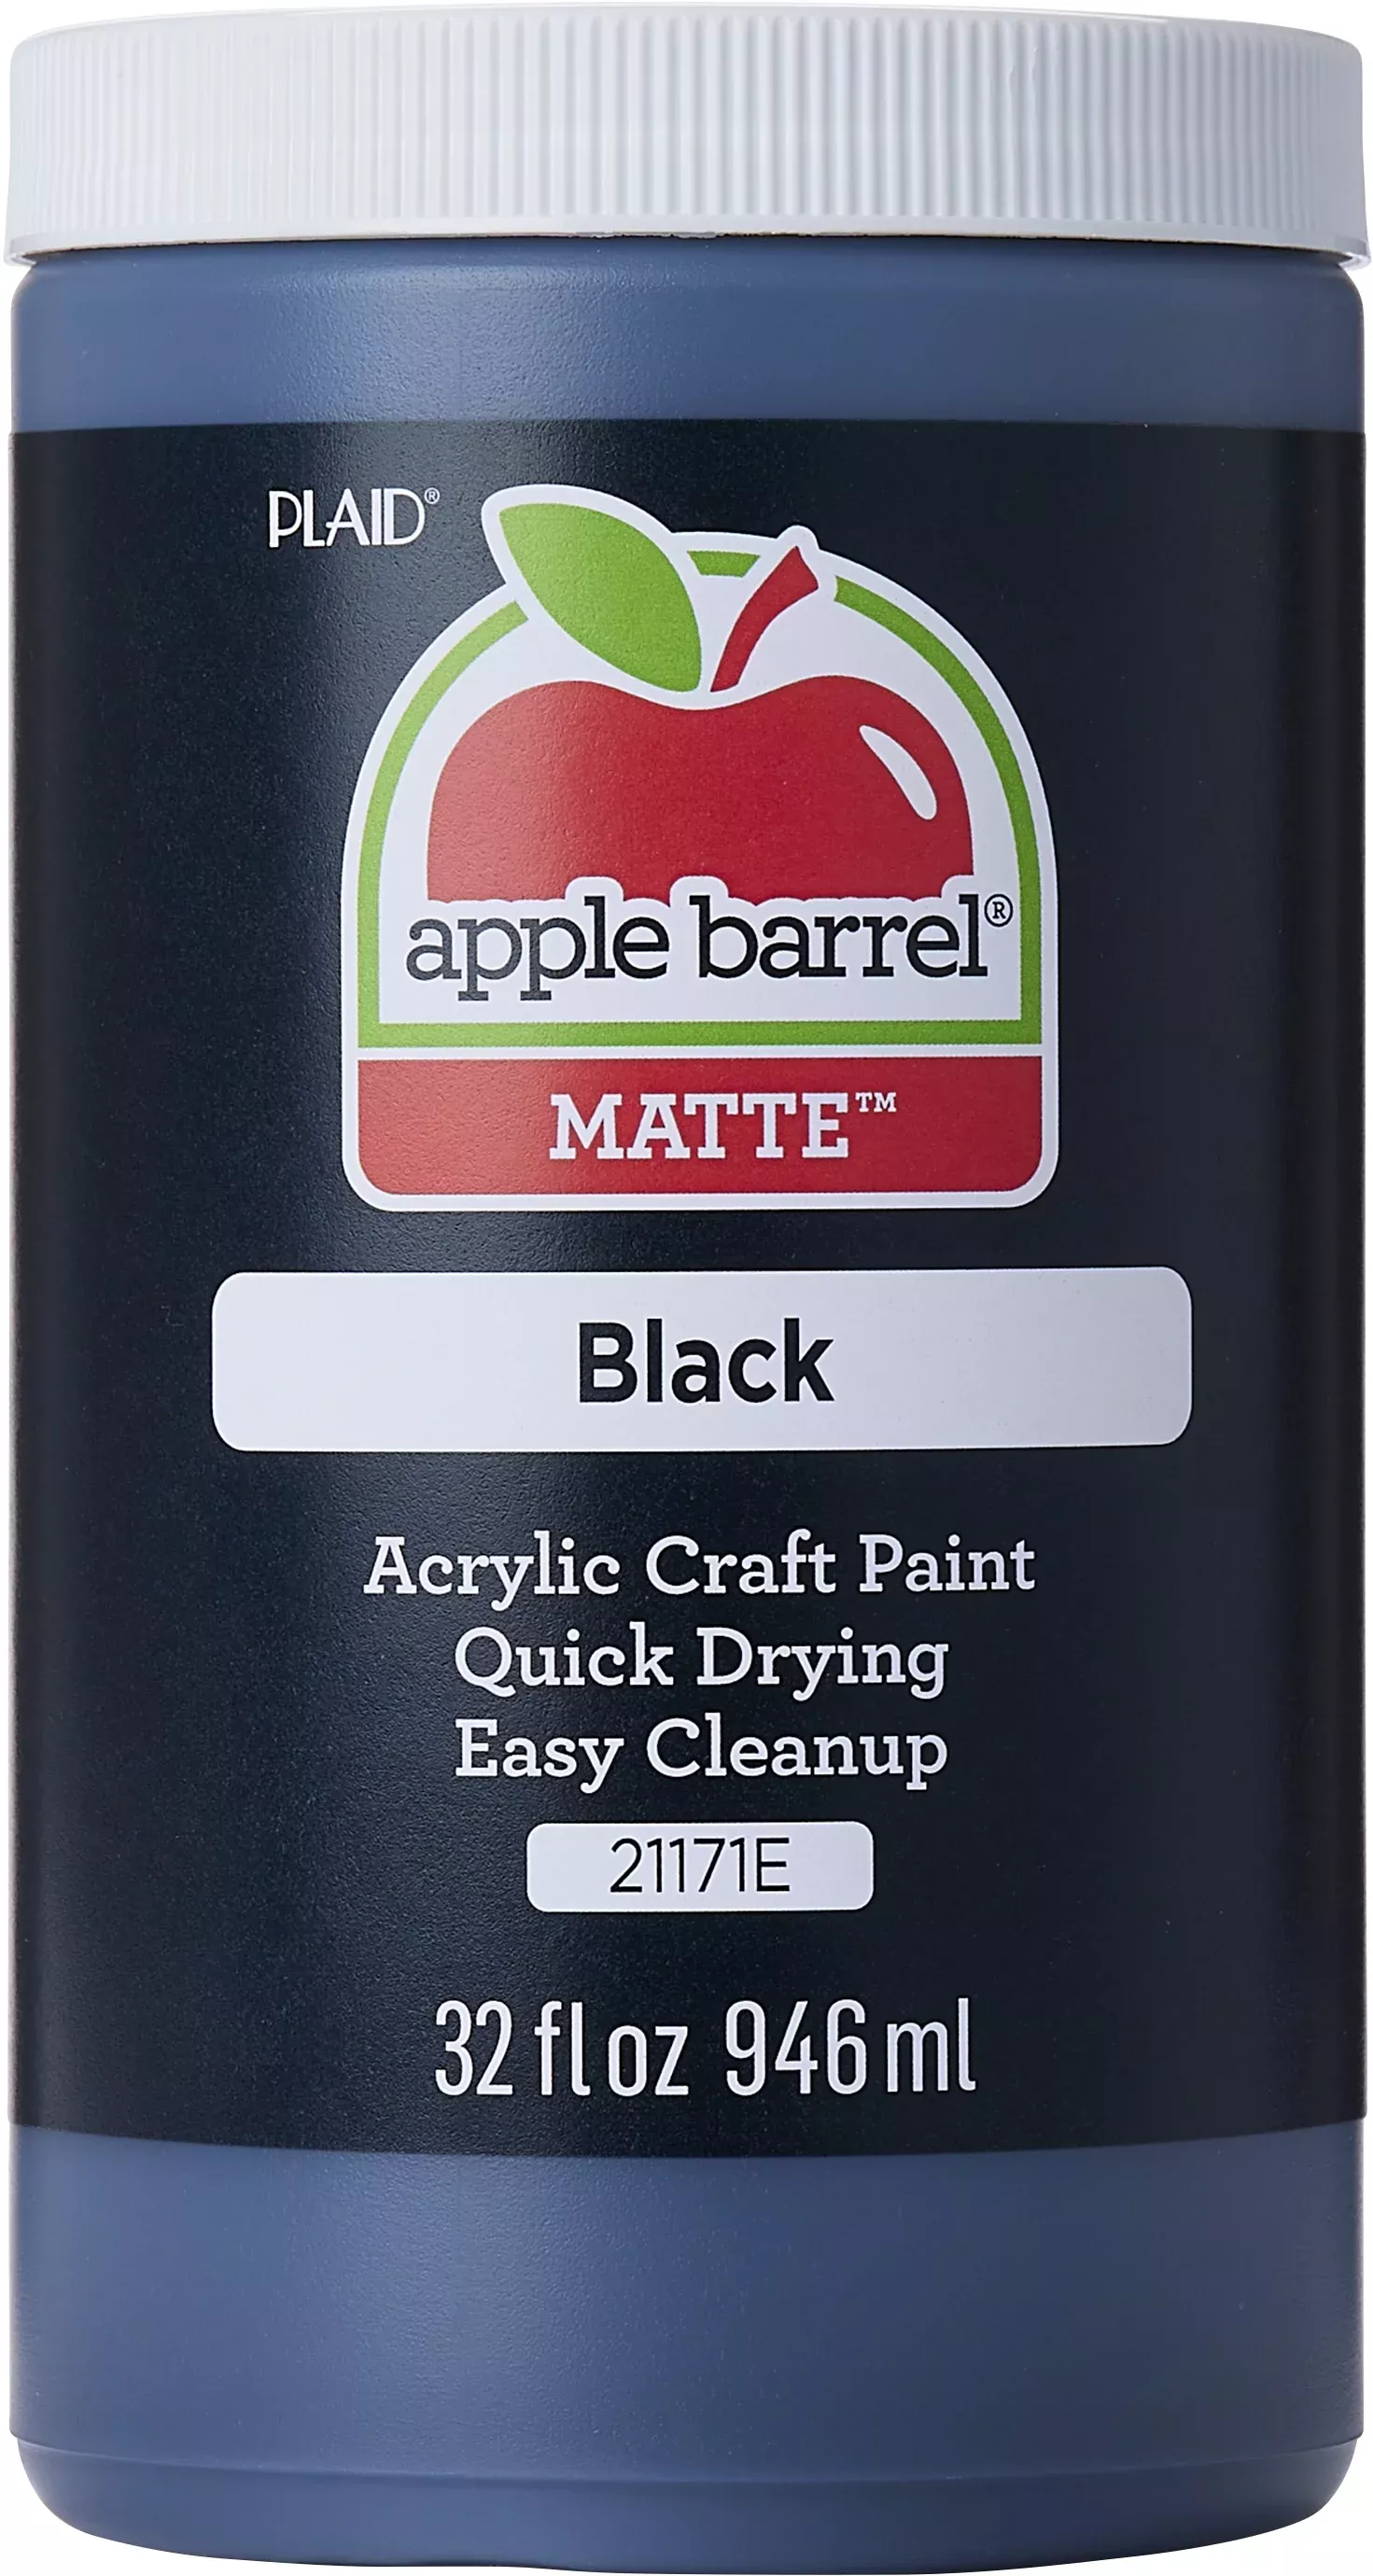 Apple Barrel Acrylic Craft Paint, Matte Finish, White, 32 fl oz